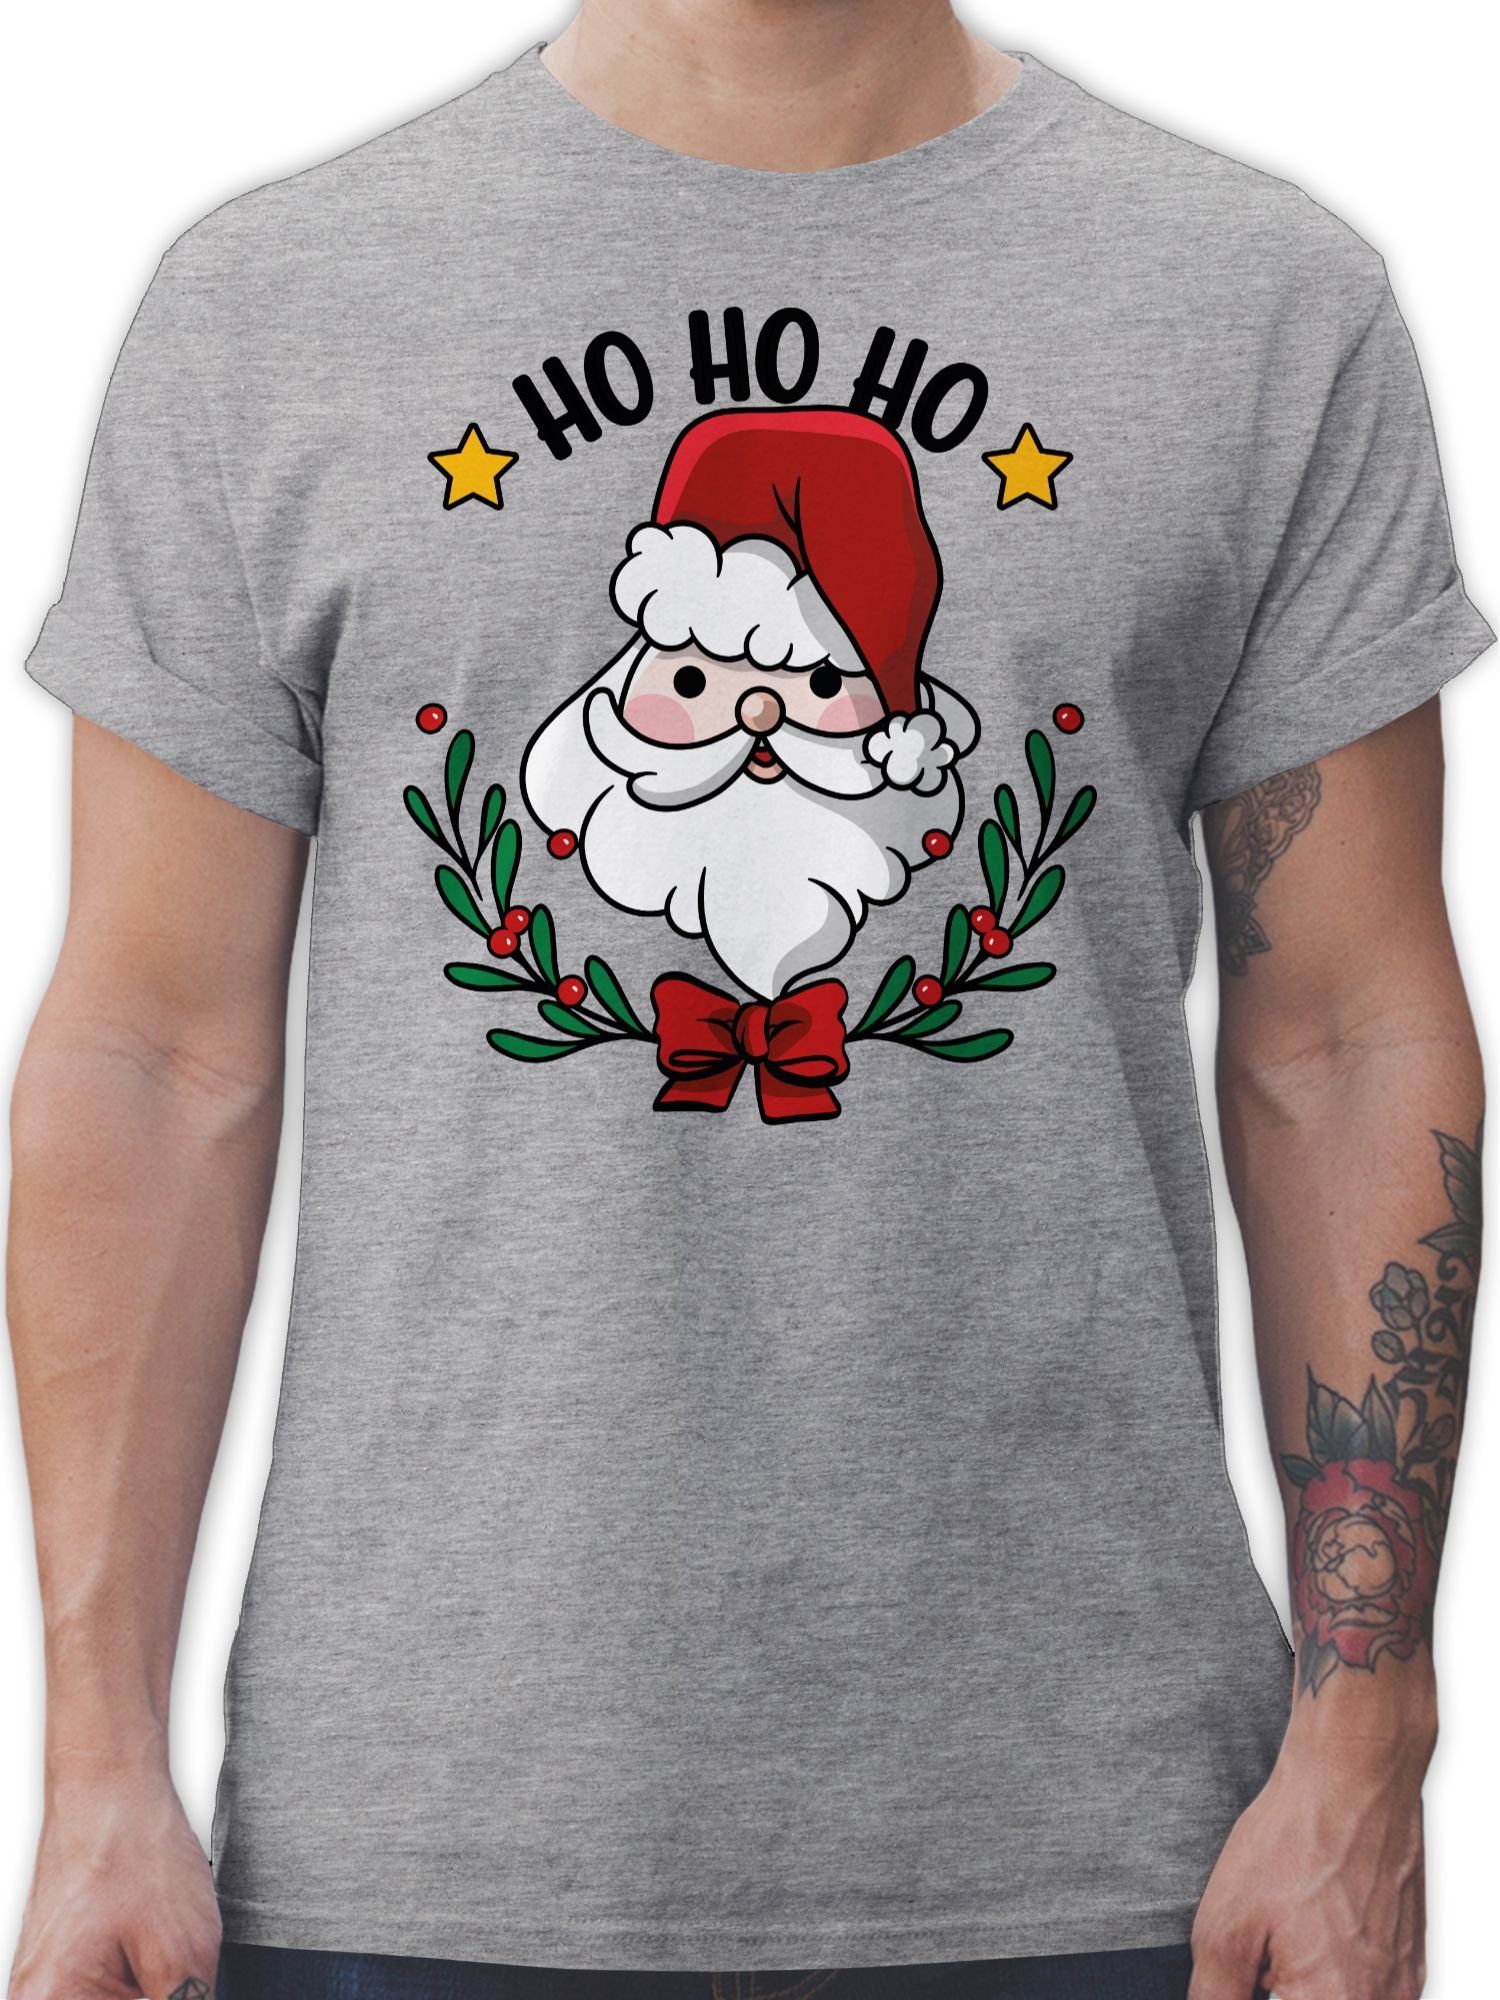 Shirtracer T-Shirt Ho Ho Ho mit Weihnachtsmann und Weihnachtsschmuck -  Weihachten Kleidung - Herren Premium T-Shirt tshirt herren weihnachtsmann -  weihnachtsoutfit männer - xmas shirt